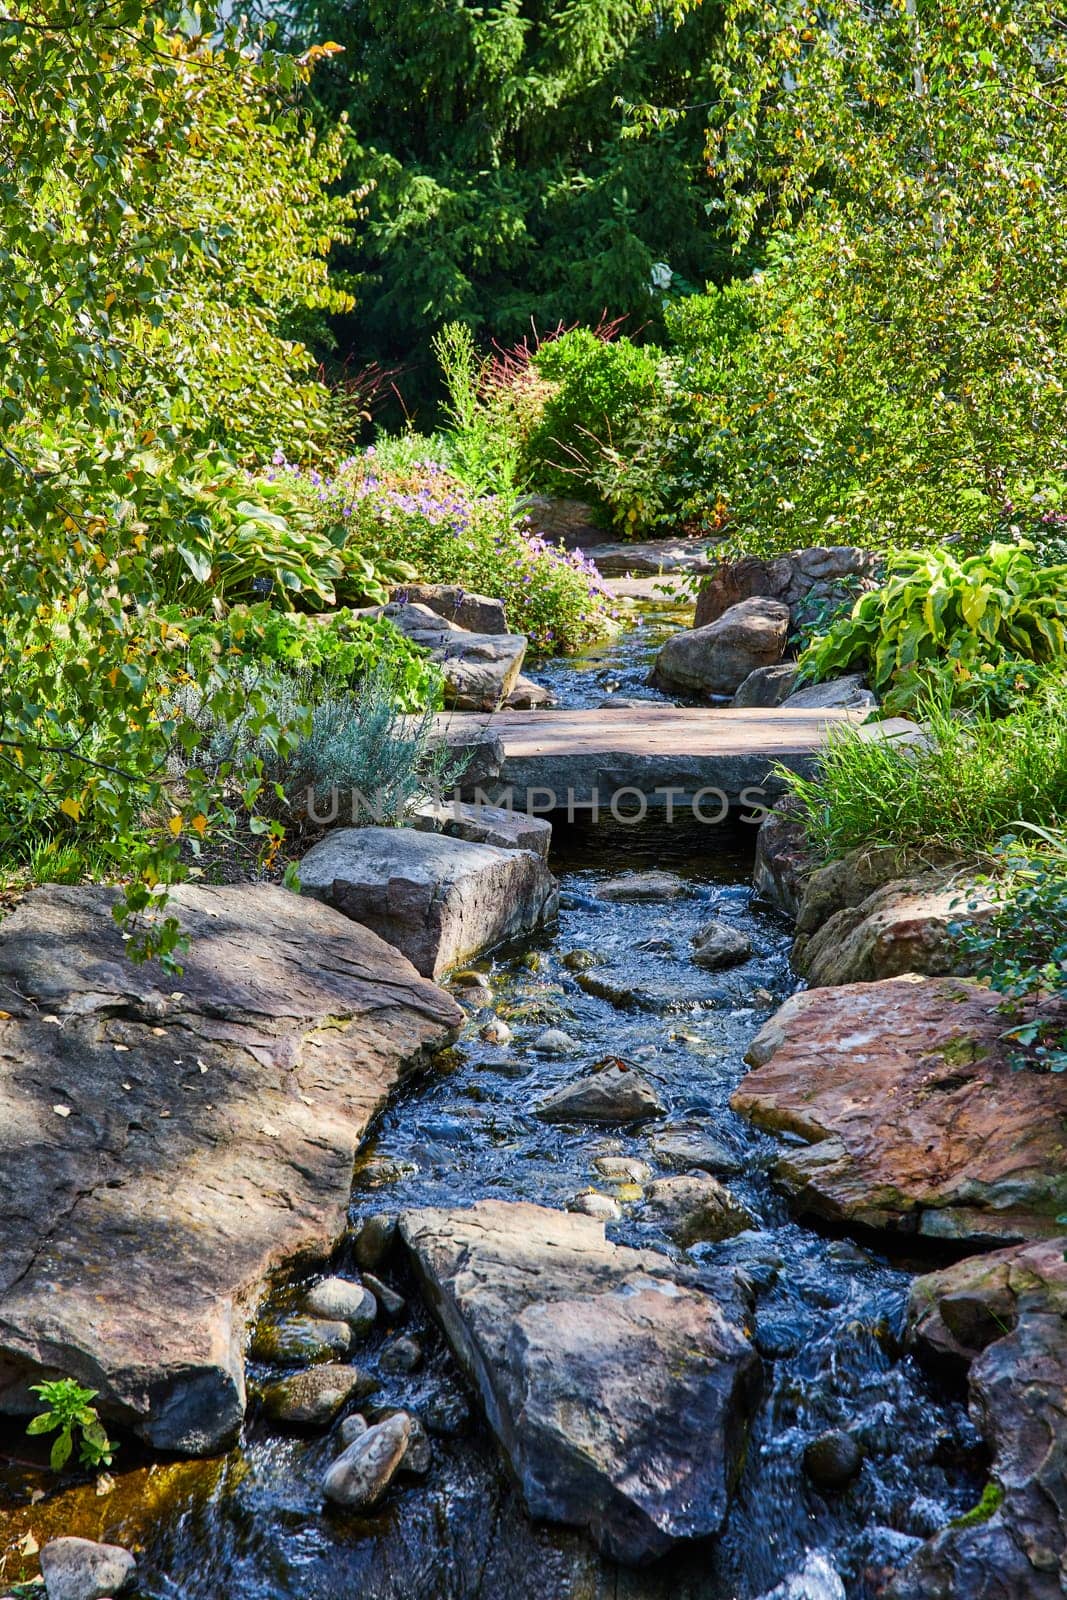 Serene Summer Day at Elkhart Botanic Gardens, Indiana - Sparkling Creek, Charming Wooden Bridge, and Vibrant Flora